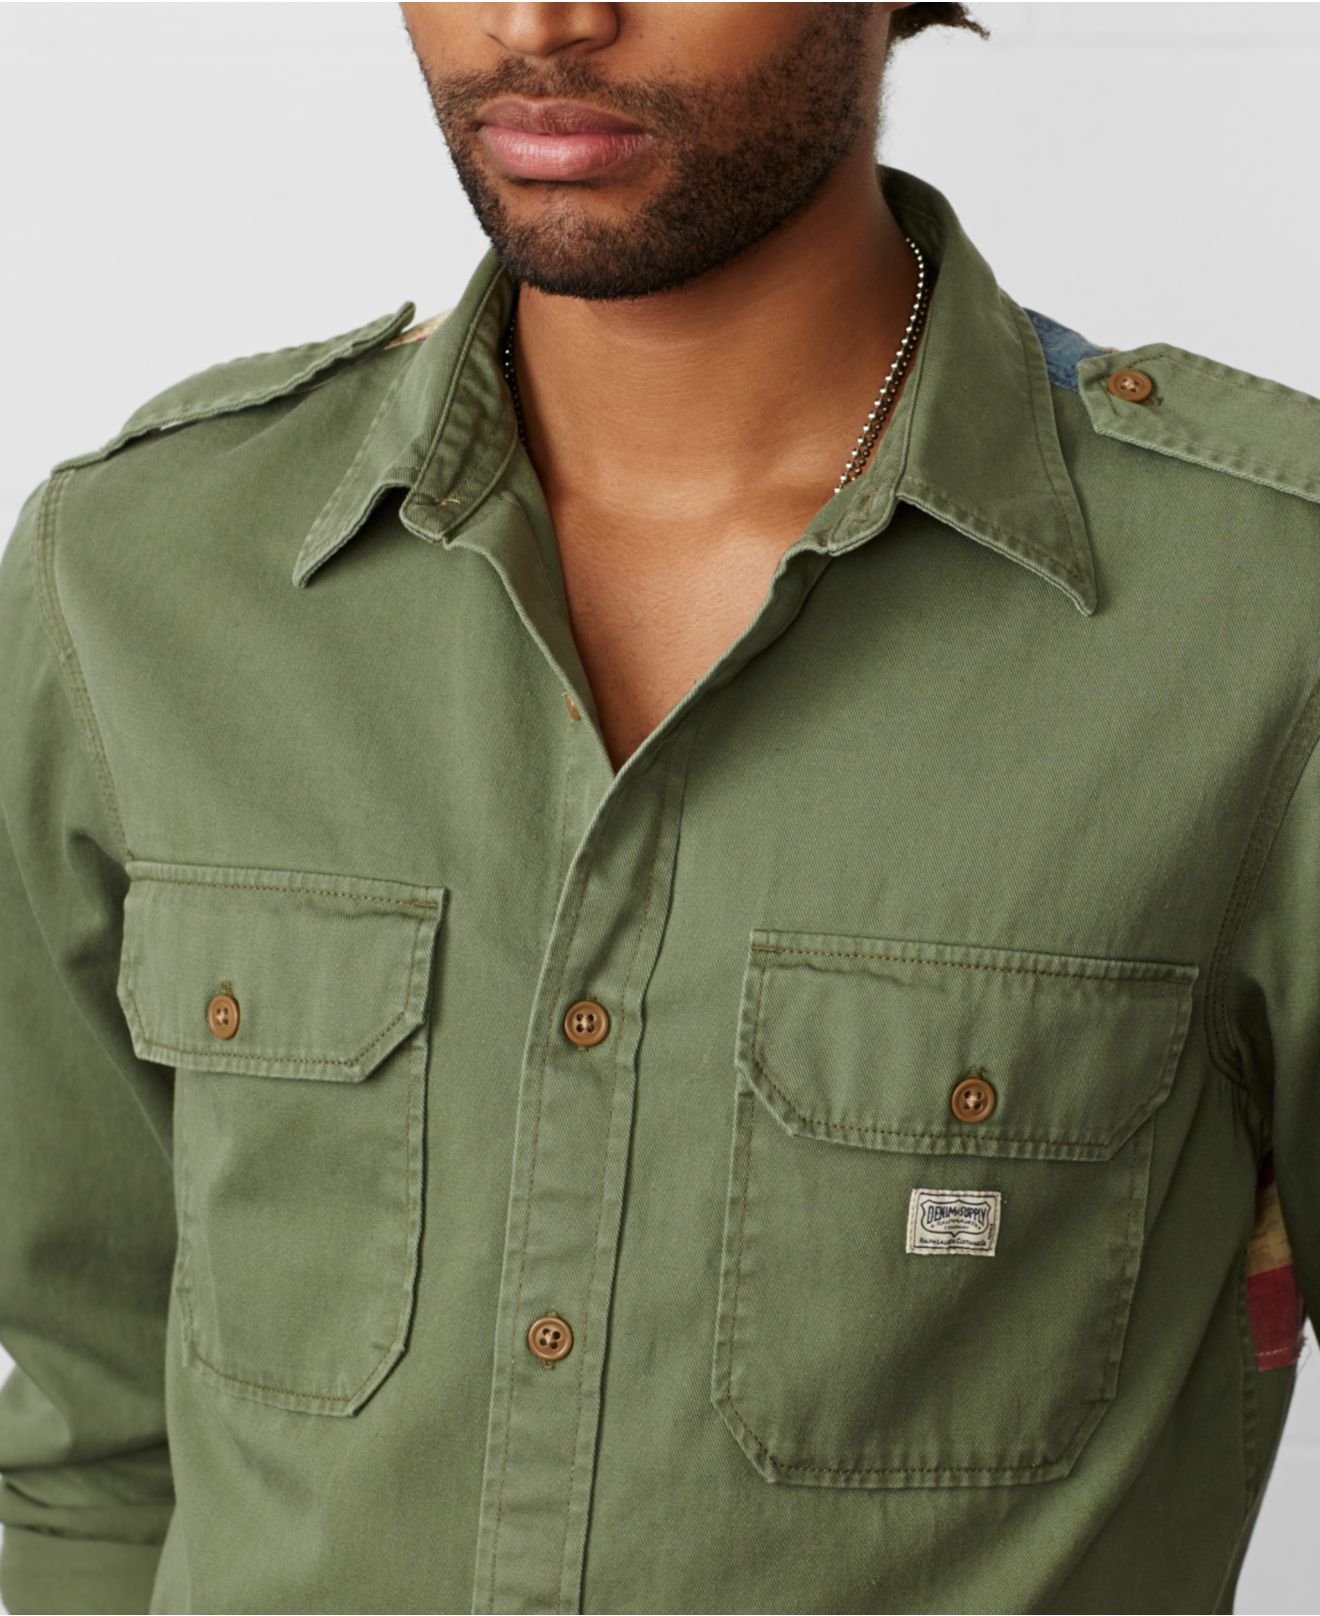 Denim & Supply Ralph Lauren Flag-Back Military Shirt in Army Olive (Green)  for Men - Lyst